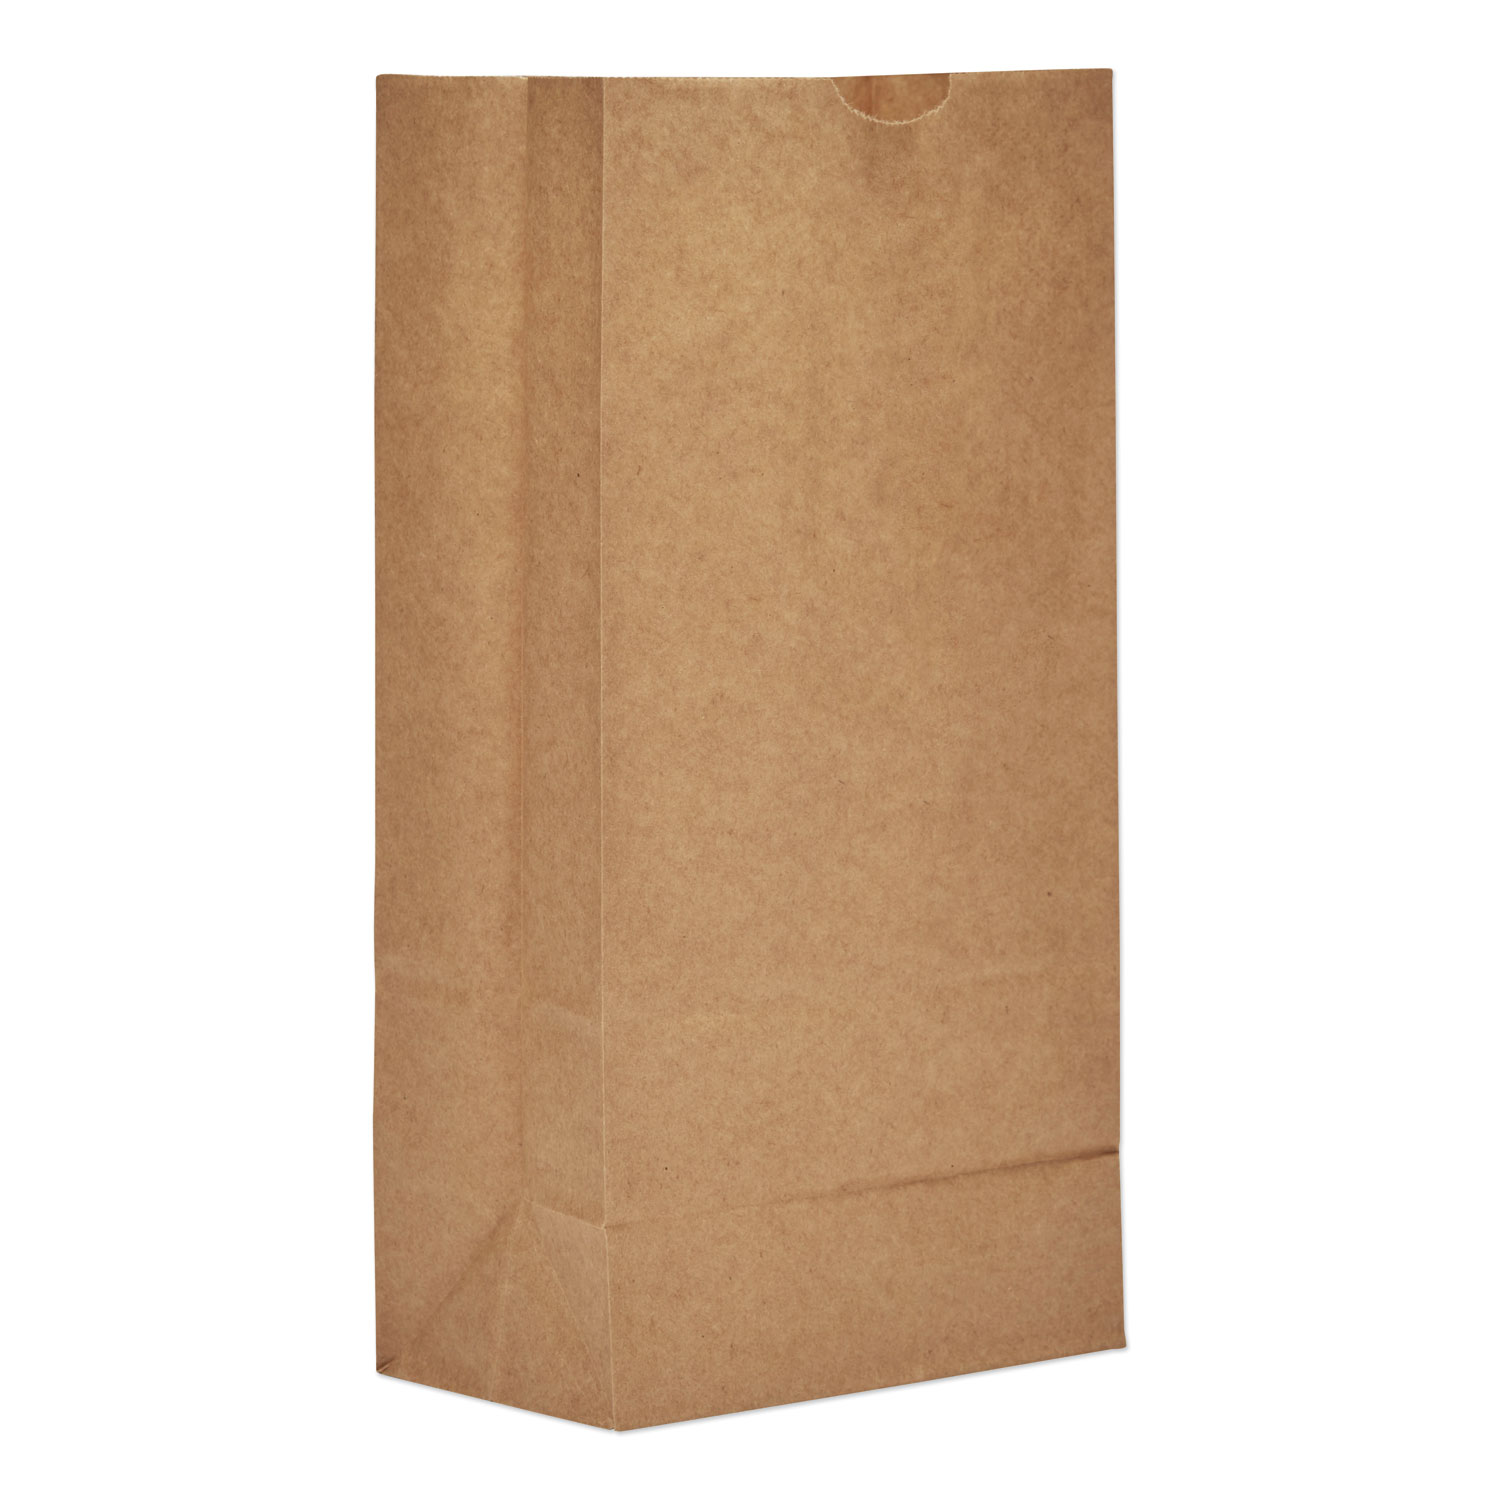  General 89319 Grocery Paper Bags, 50 lbs Capacity, #8, 6.13w x 4.13d x 12.44h, Kraft, 500 Bags (BAGGH8500) 